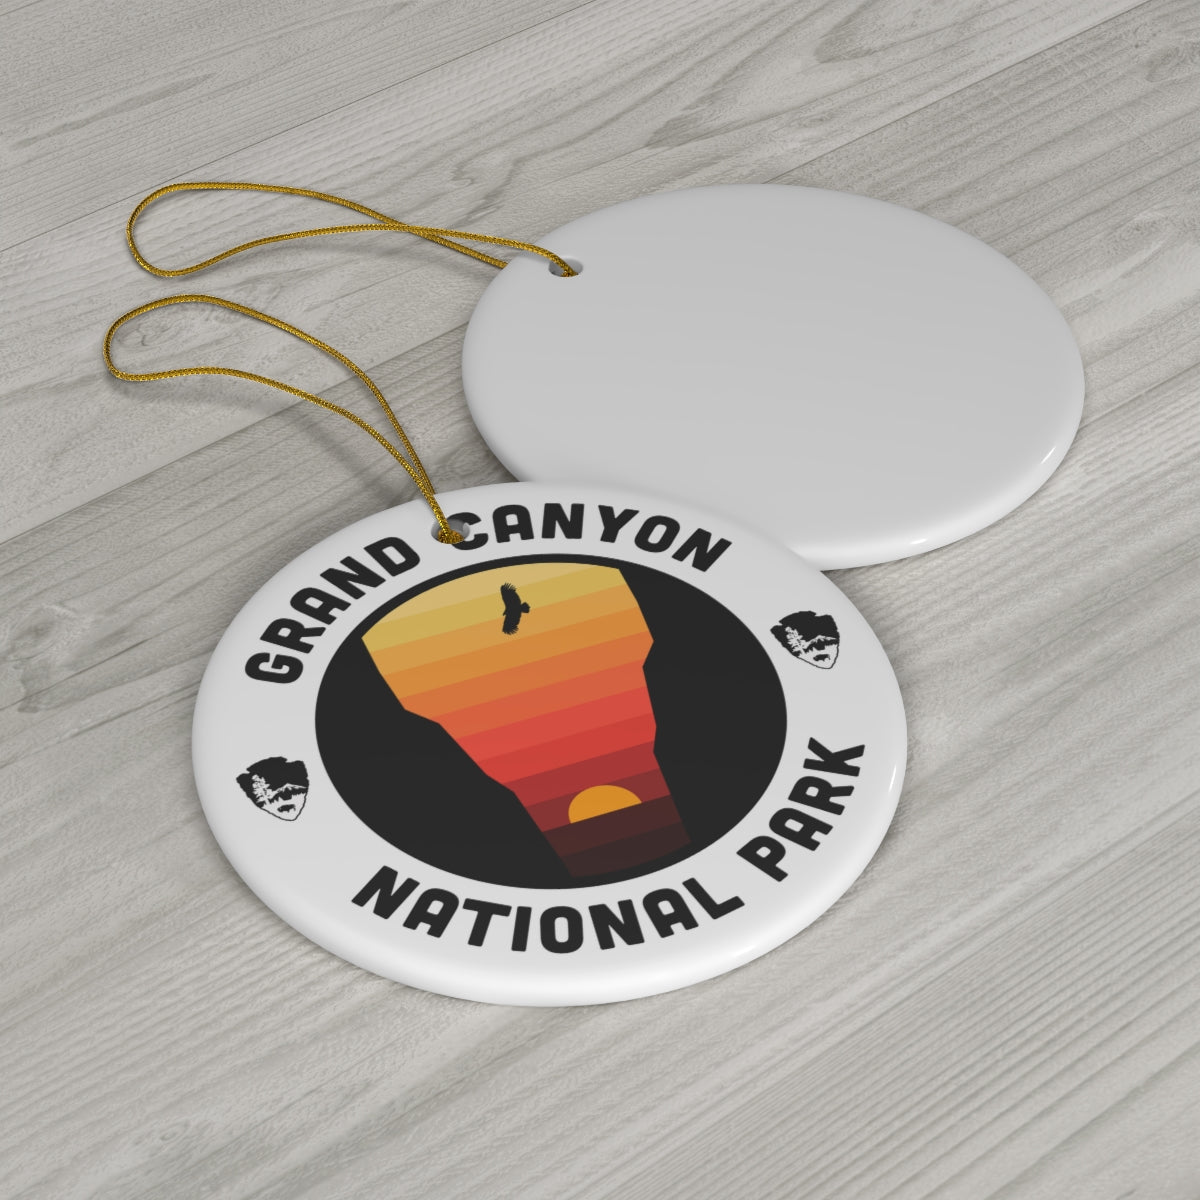 Grand Canyon National Park Ornament - Round Emblem Design